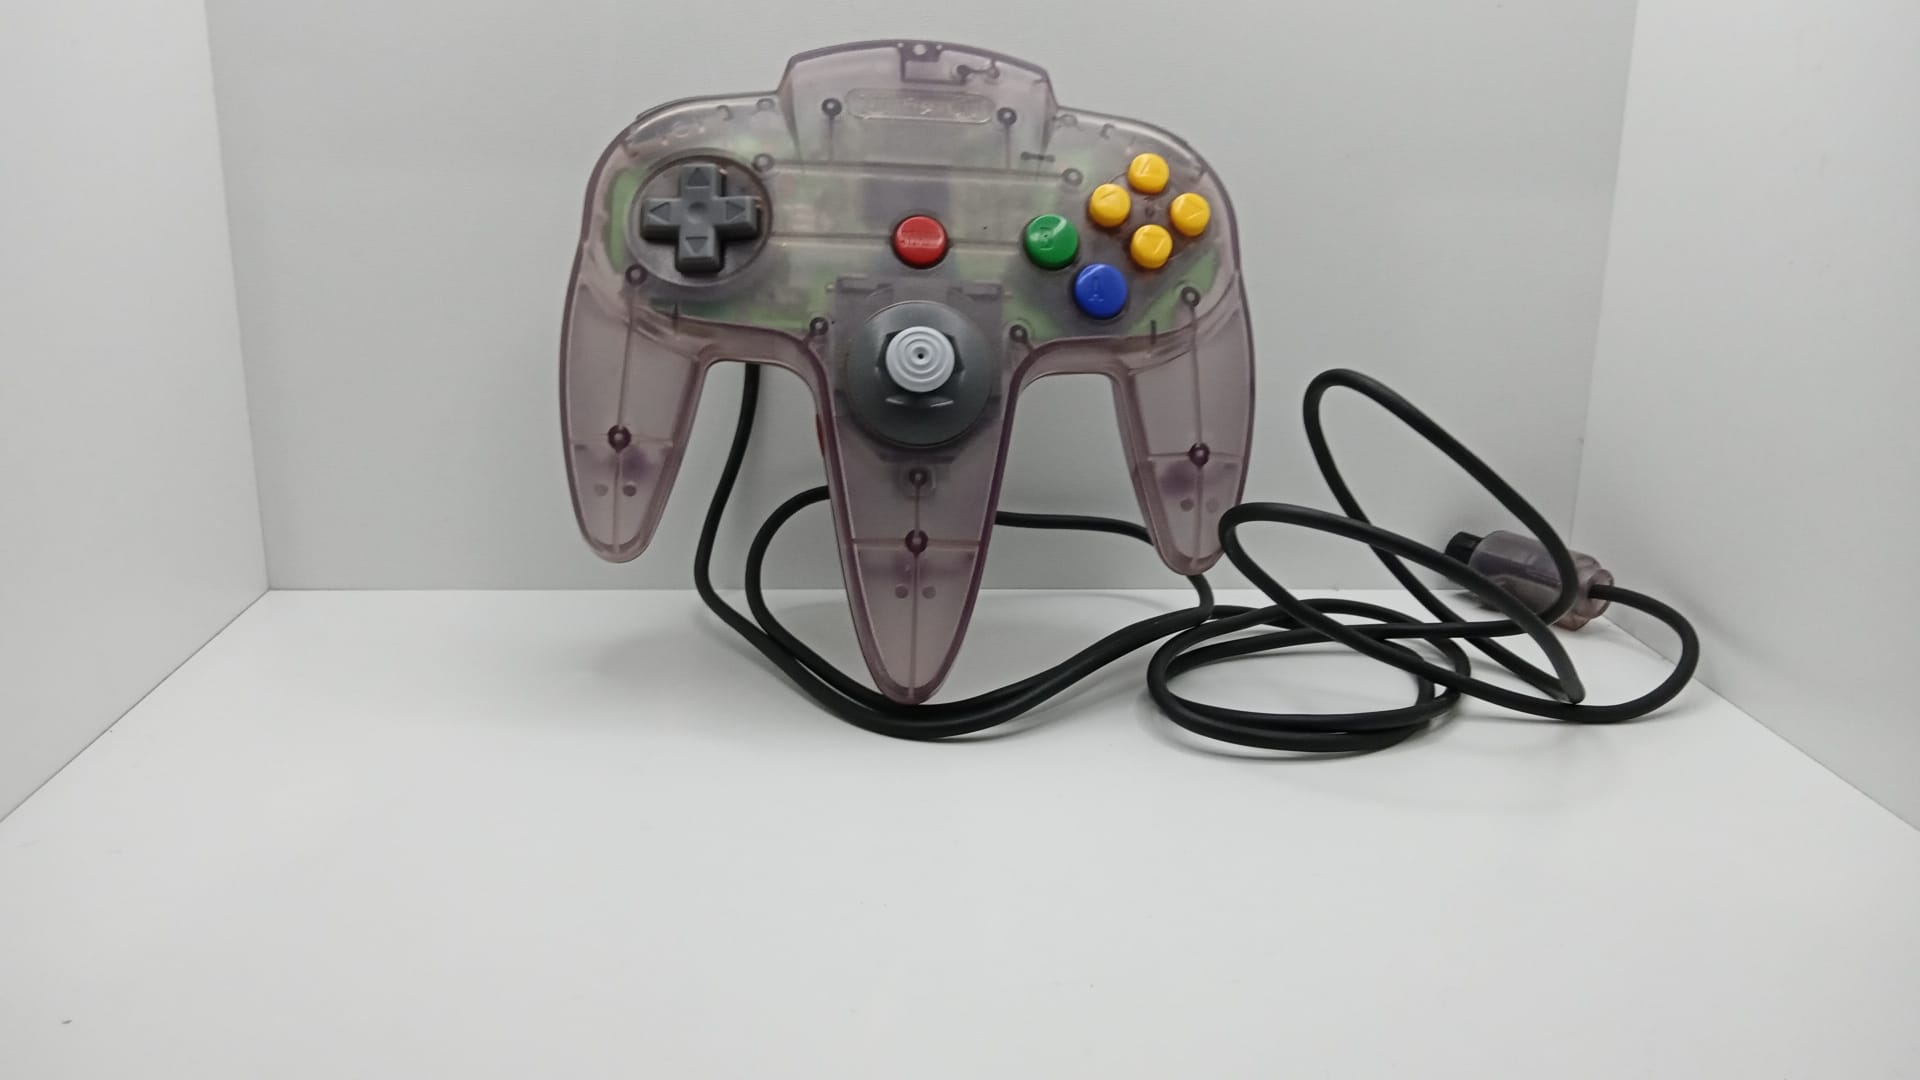 Ovladač Nintendo 64 - Nintendo® - Transparent/Purple  - vyčištěno a zrenovováno